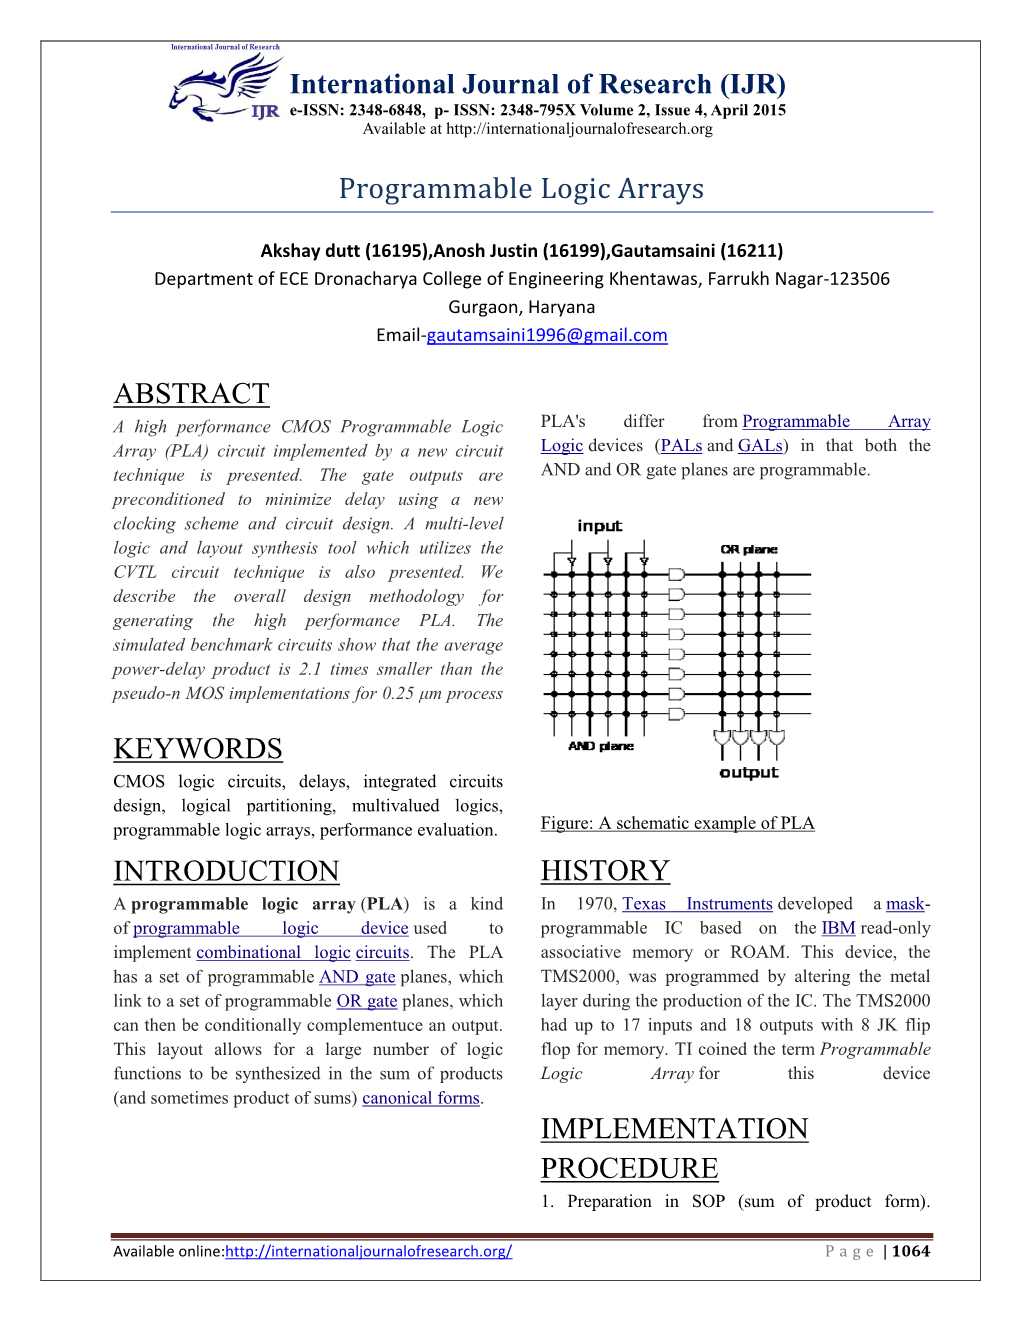 Programmable Logic Arrays